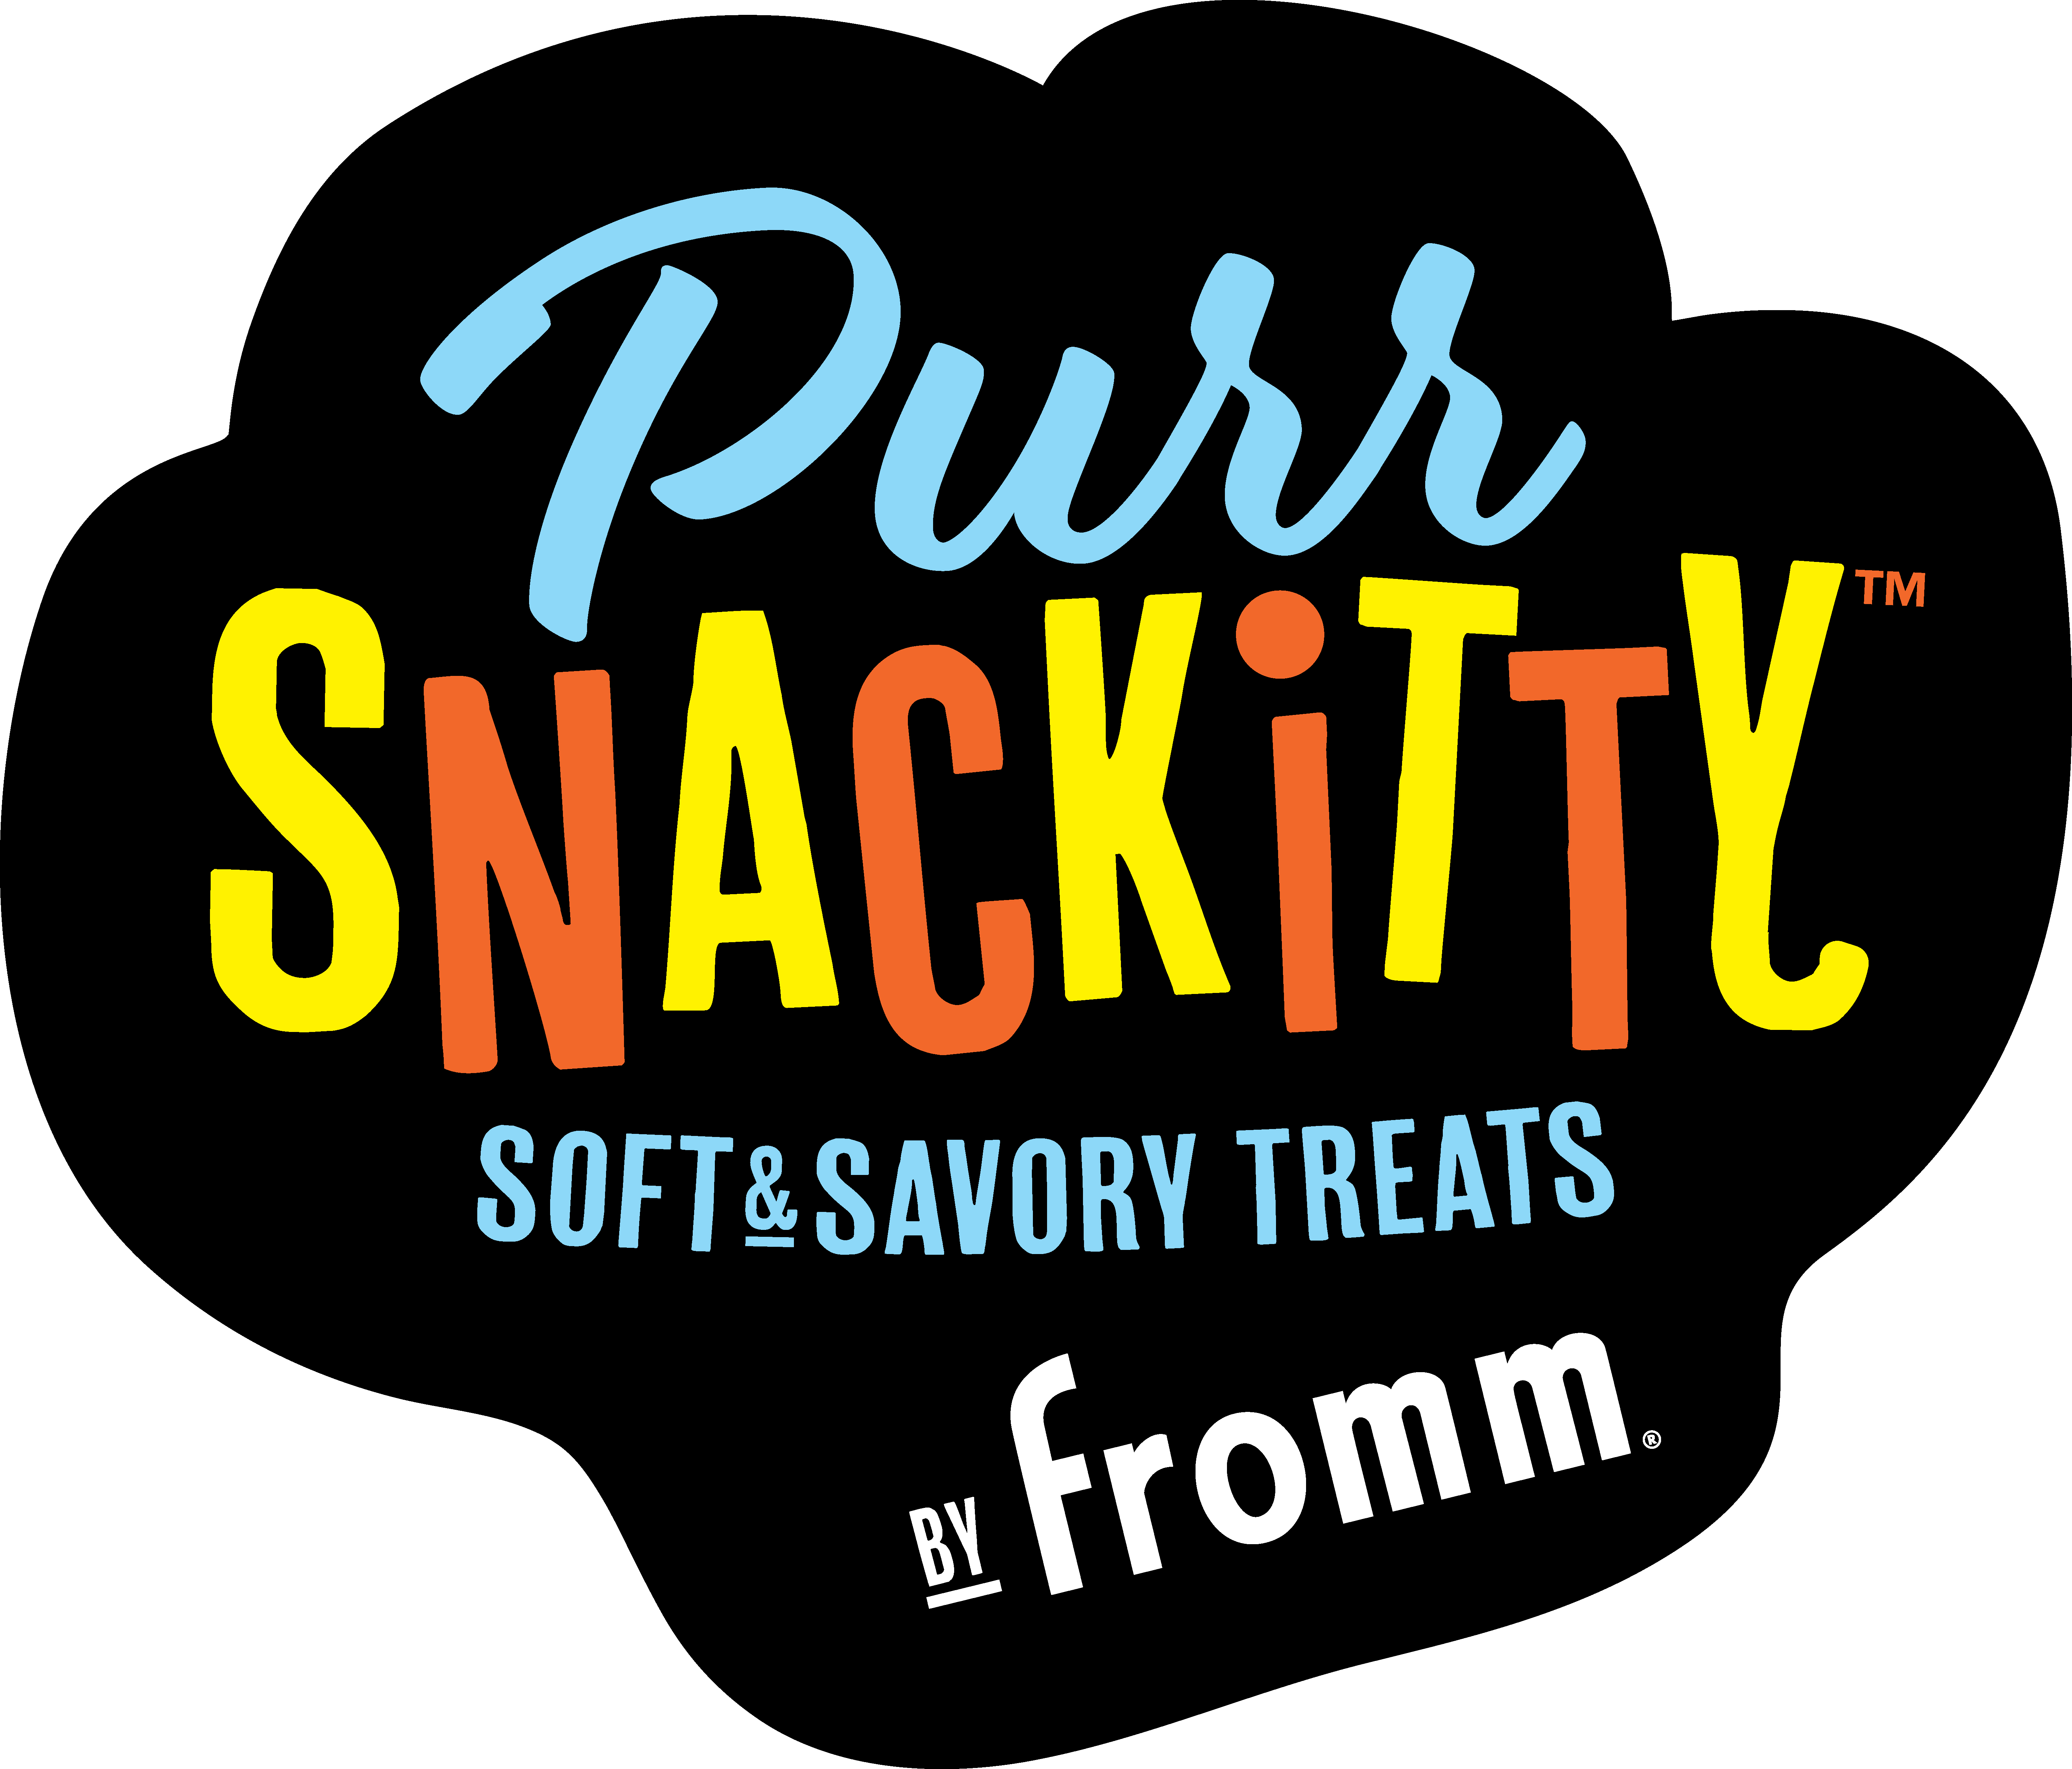 PurrSnackitty Soft & Savory Treats